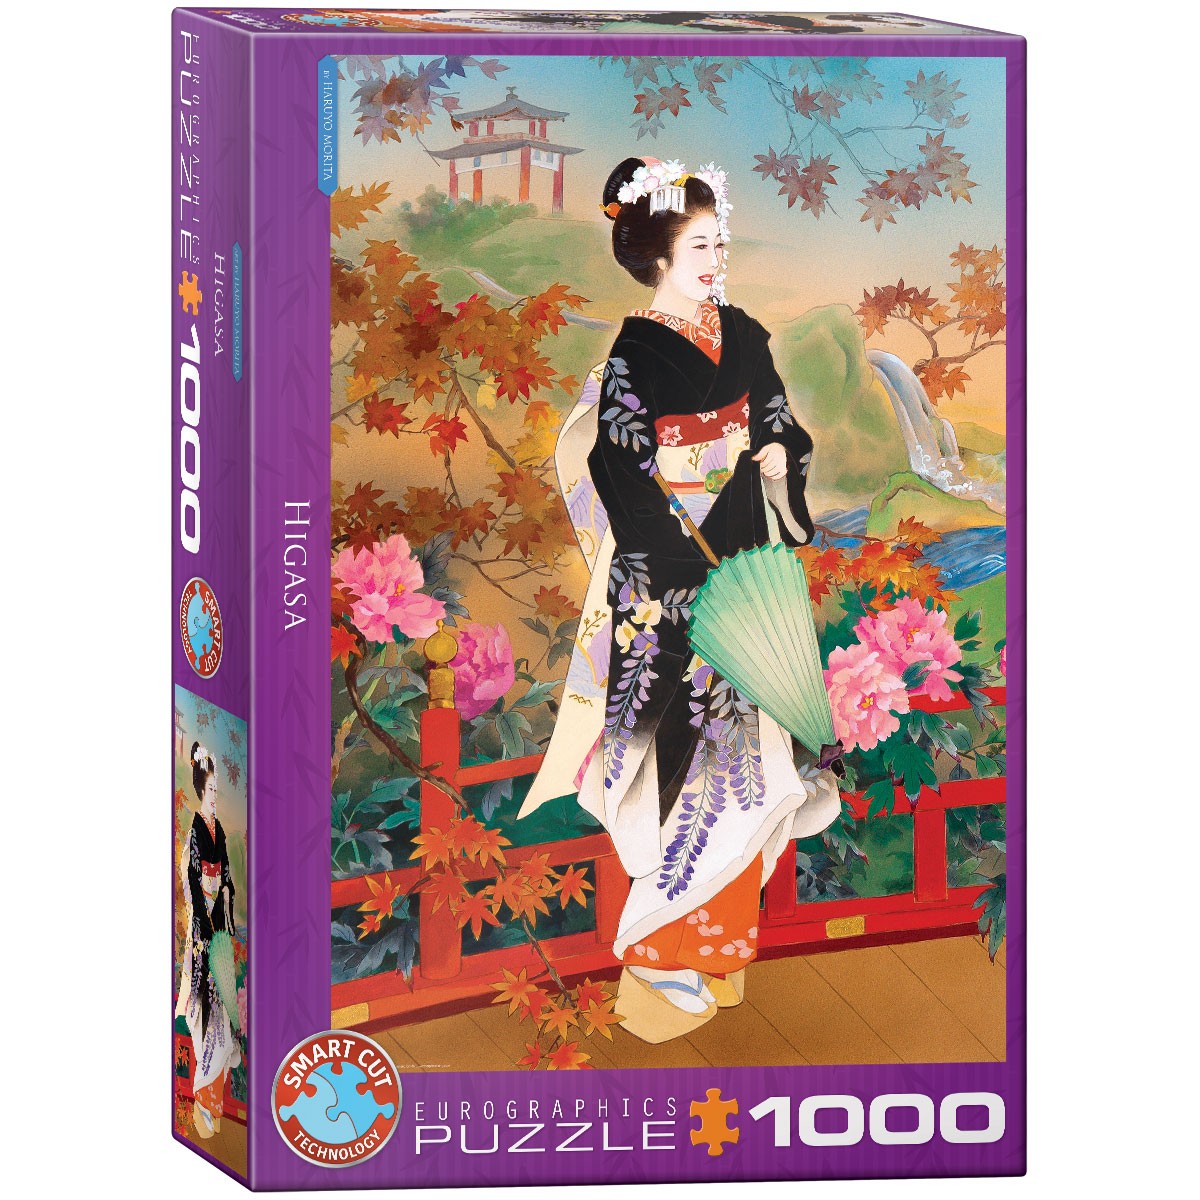 Eurographics Puzzle 6000-0742 - Higasa von Haruyo Morita  - 1000 Teile